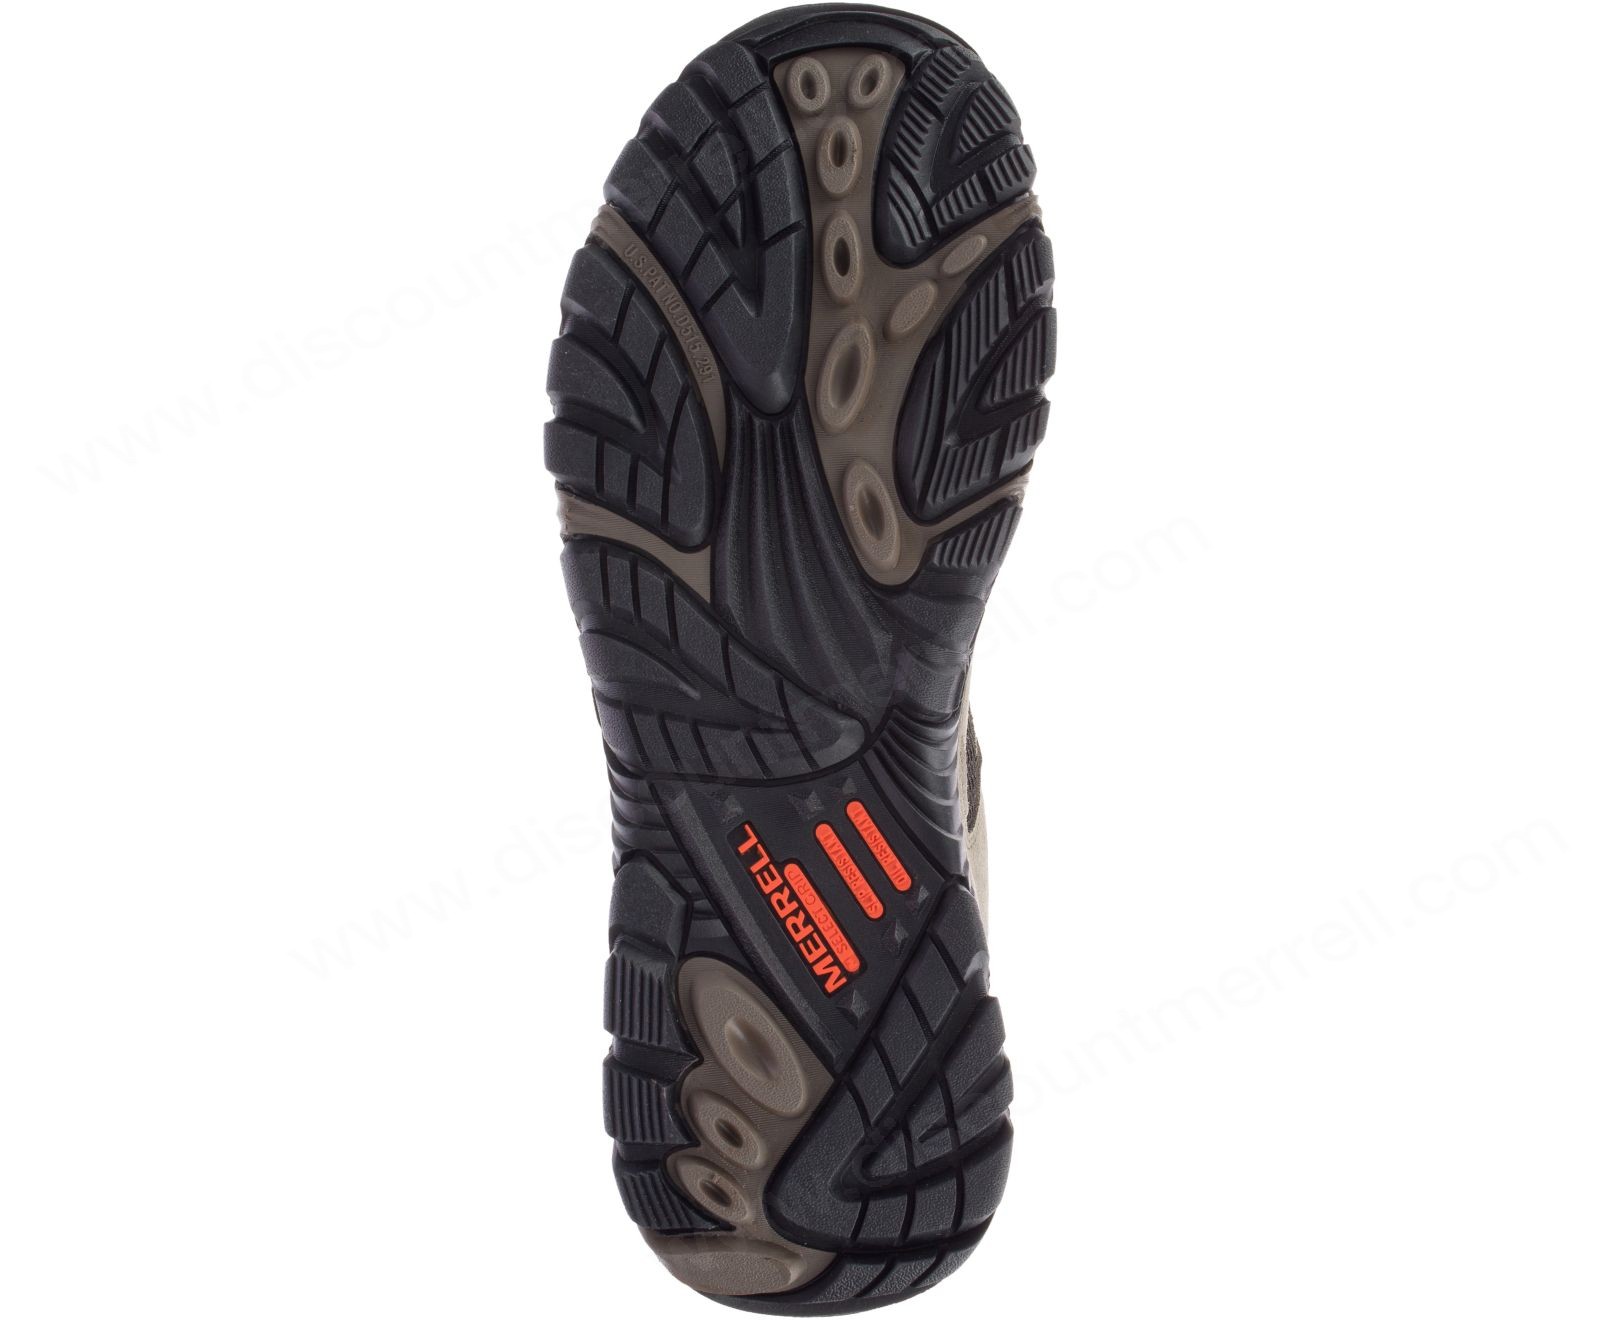 Merrell - Men's Moab Onset Waterproof Comp Toe Work Shoe - Merrell - Men's Moab Onset Waterproof Comp Toe Work Shoe